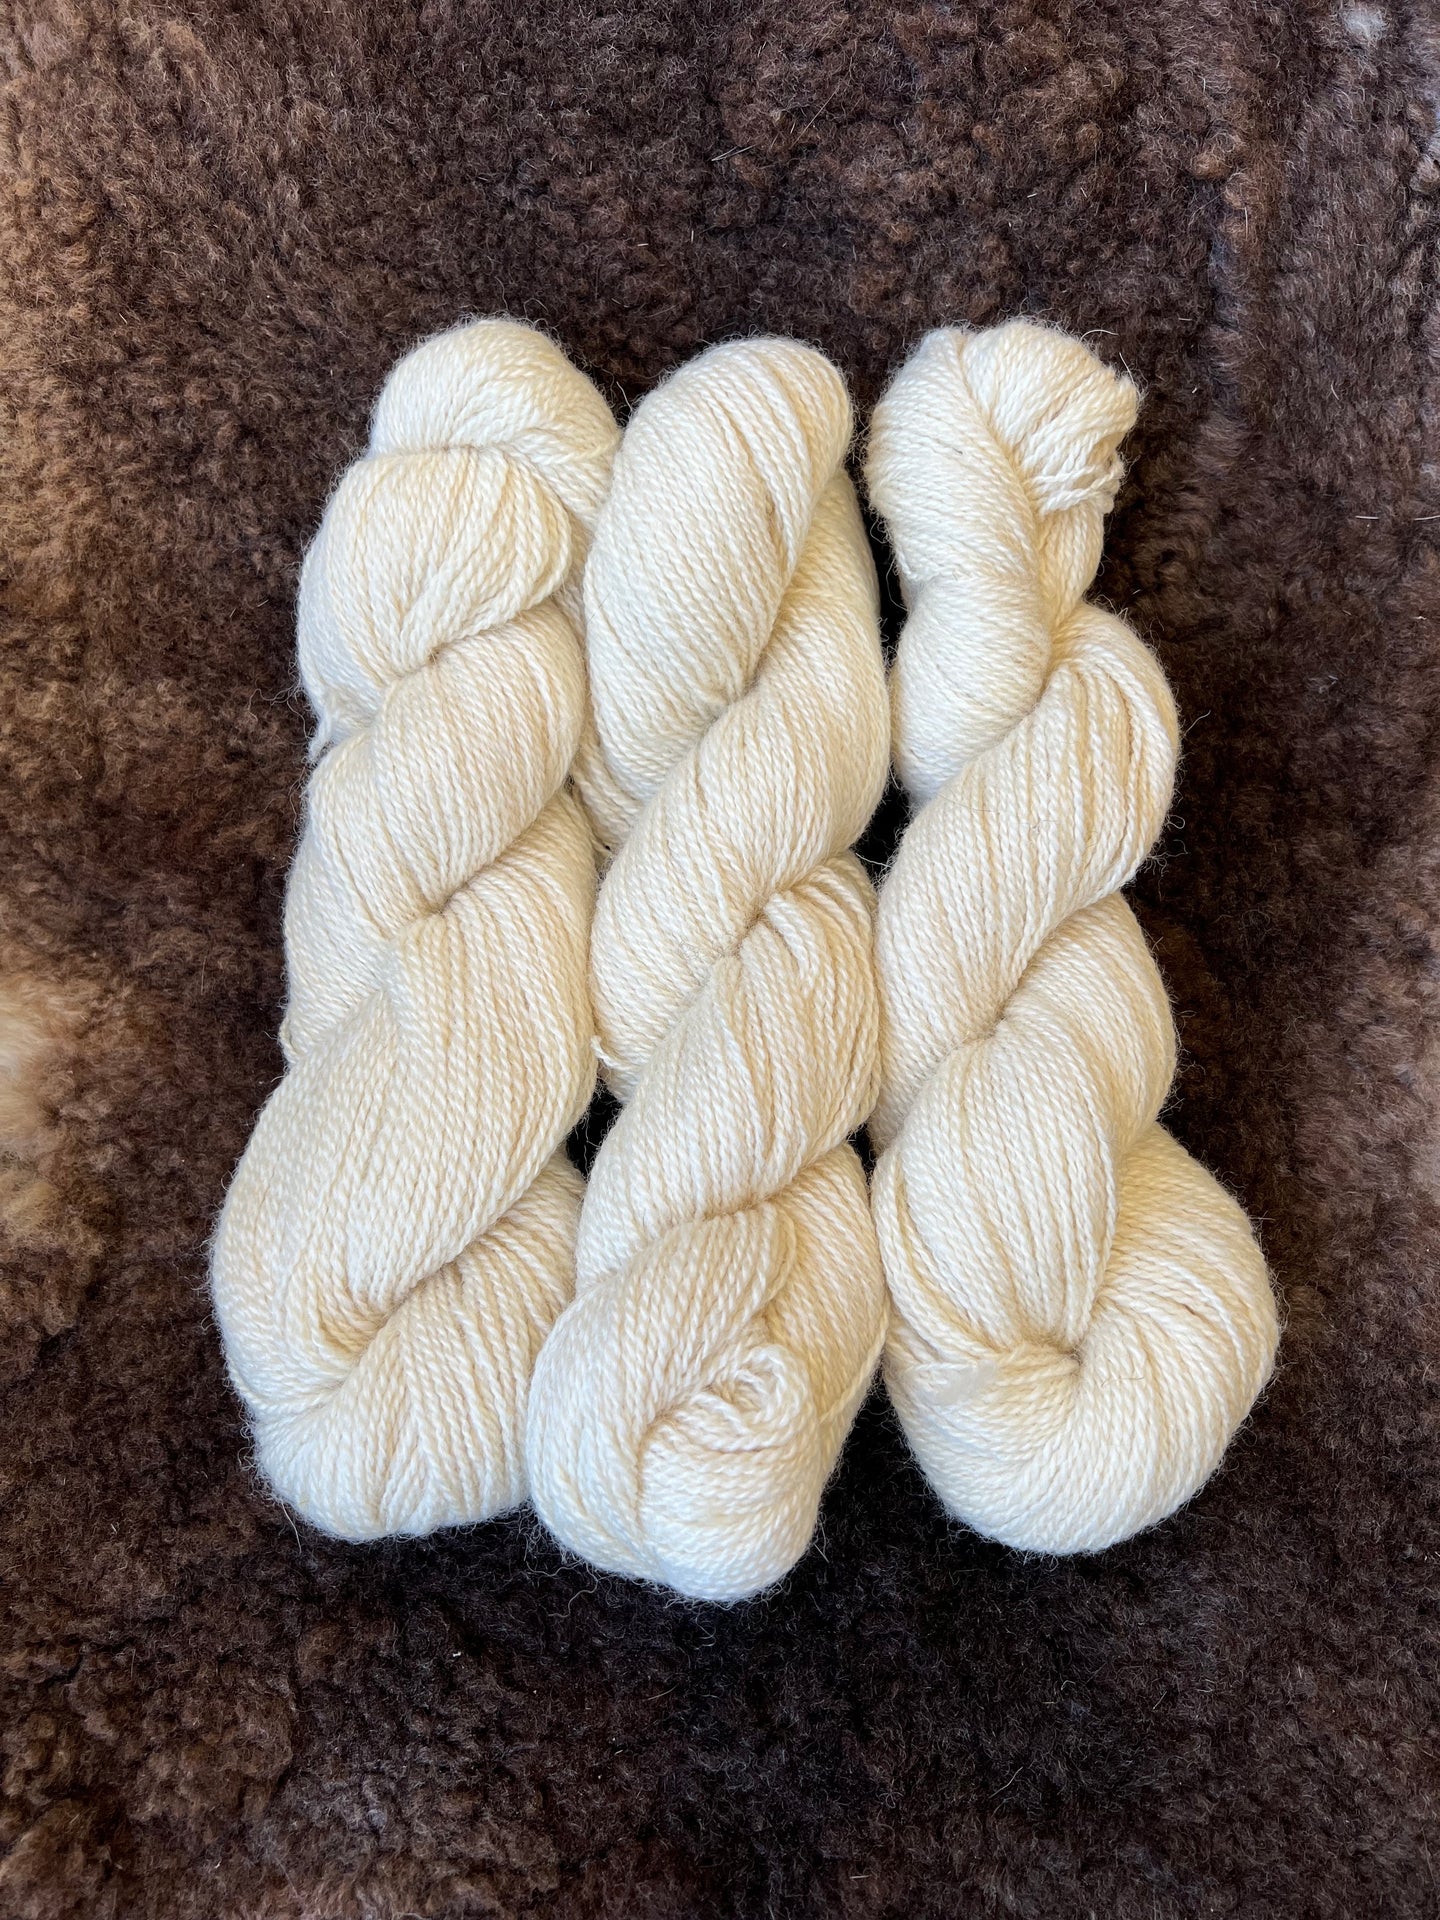 Coopworth/Alpaca/Silk Yarn